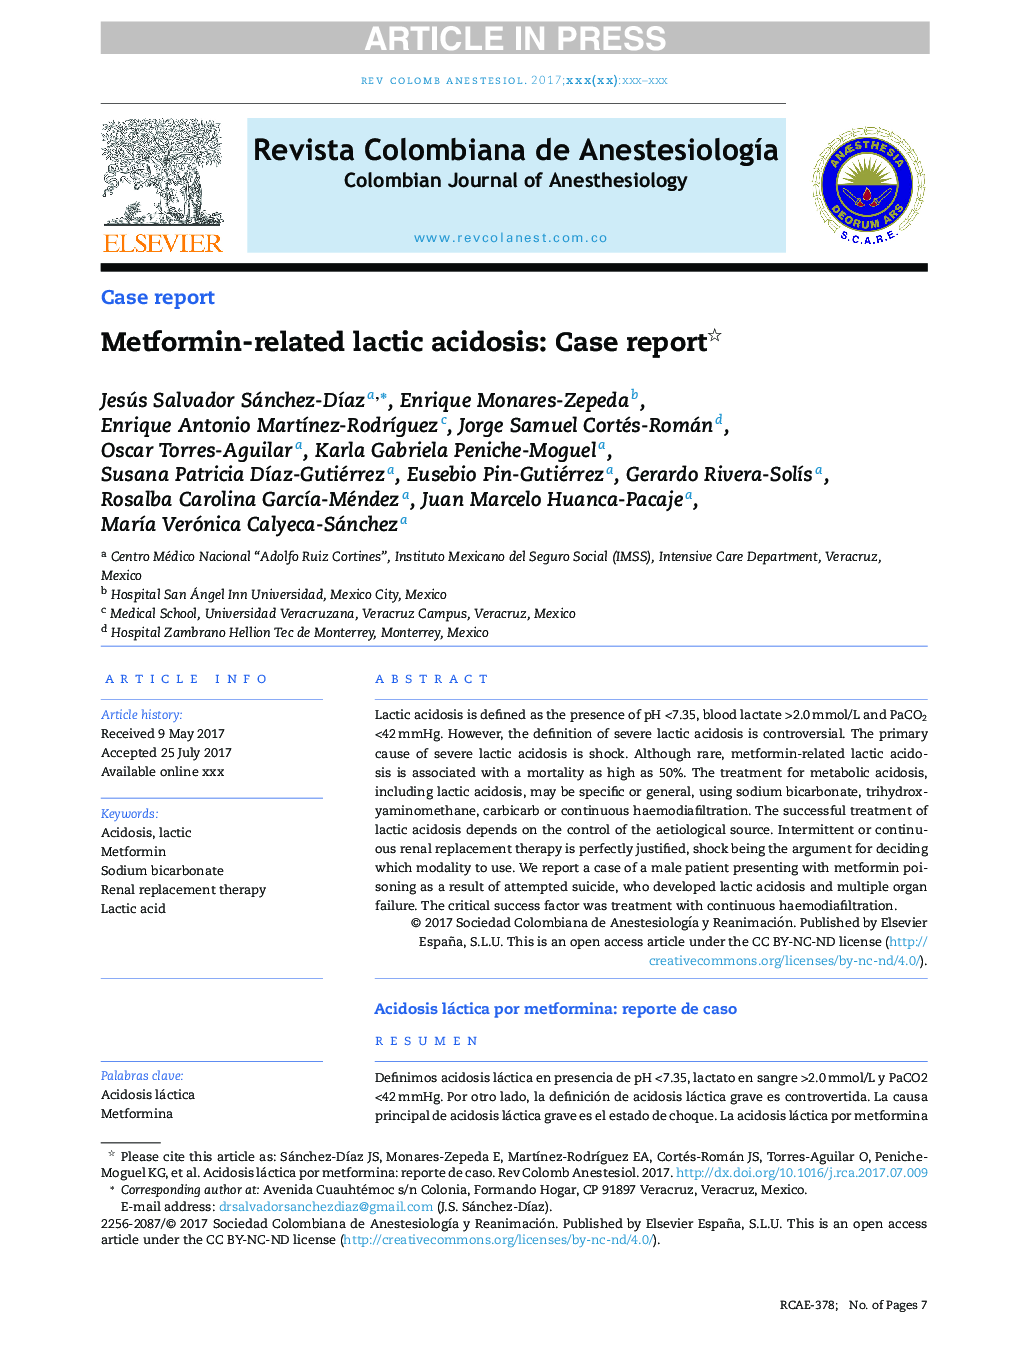 Metformin-related lactic acidosis: Case report